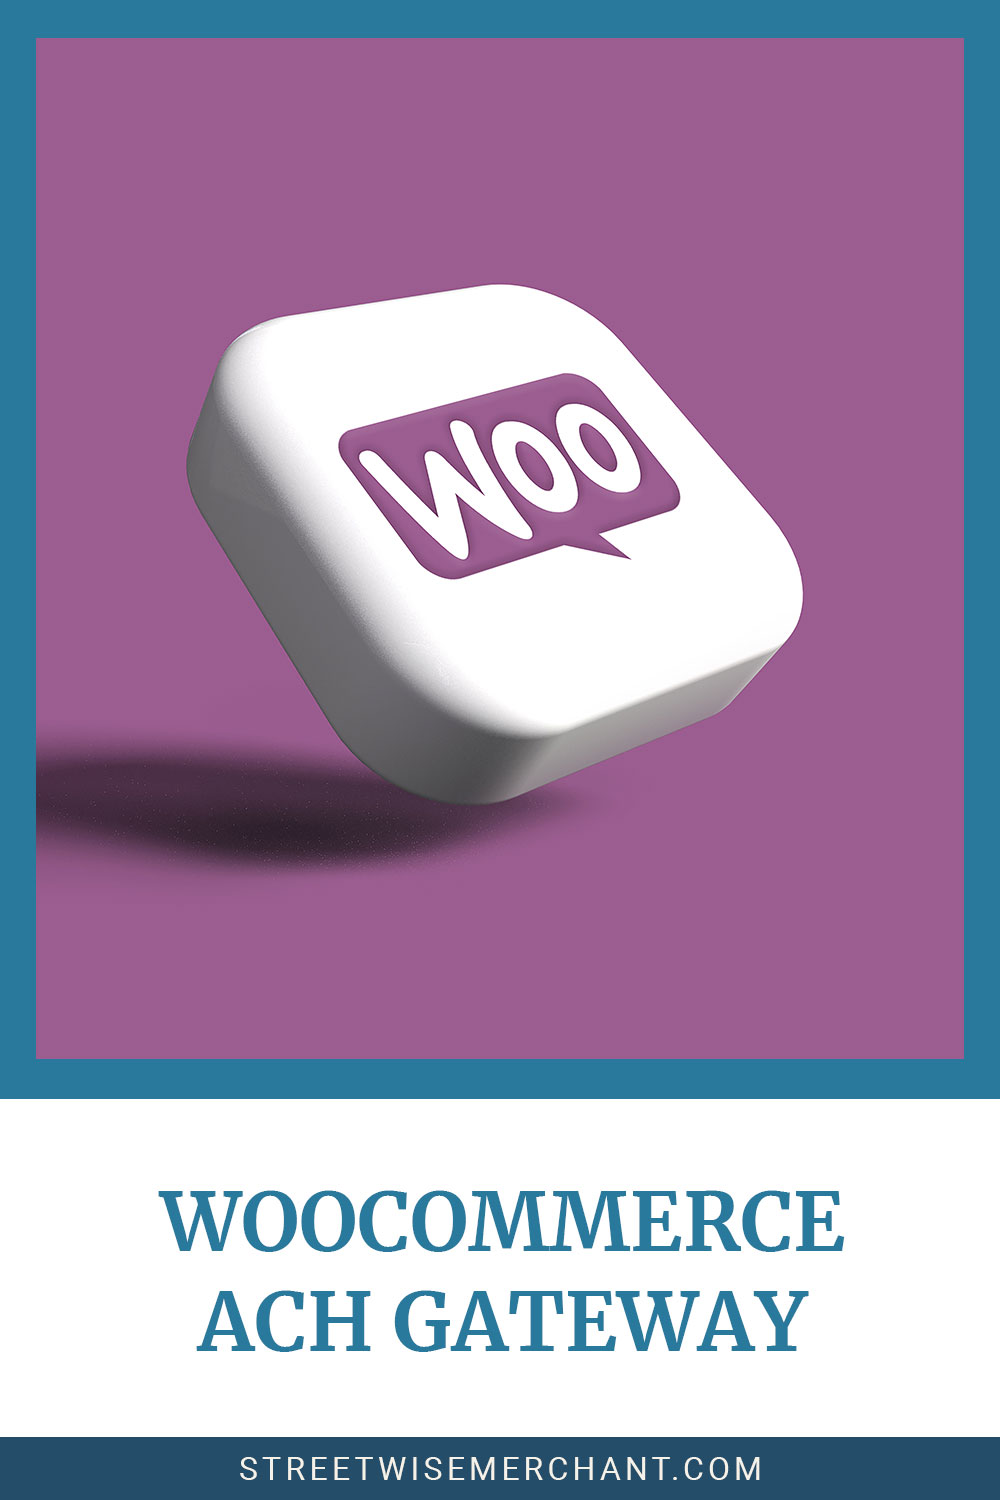 WooCommerce logo on a 3d shape - WooCommerce Ach Gateway